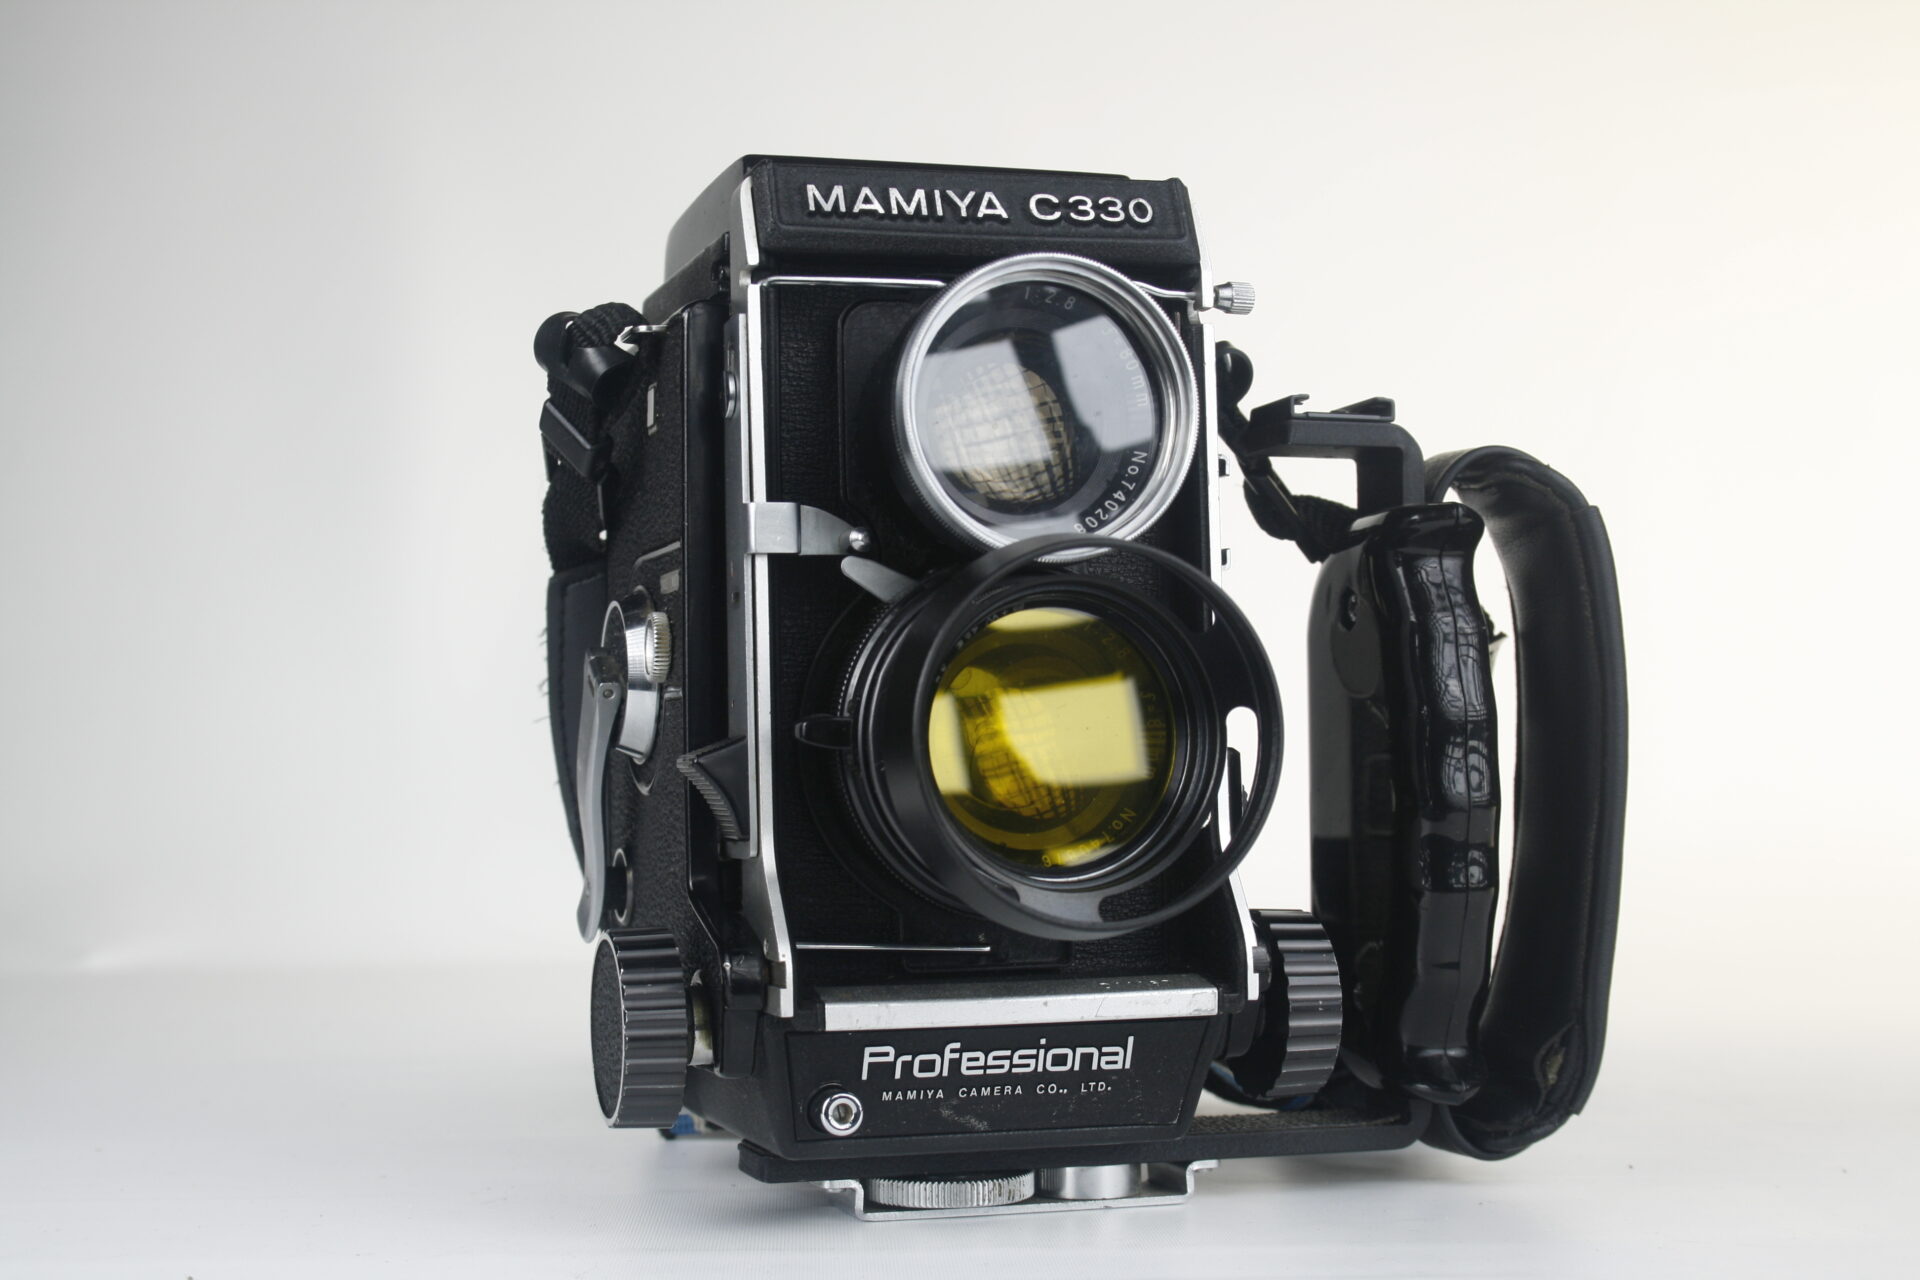 Mamiya C330 Professional. 1969. TLR camera 6×6. 120 film. Japan.